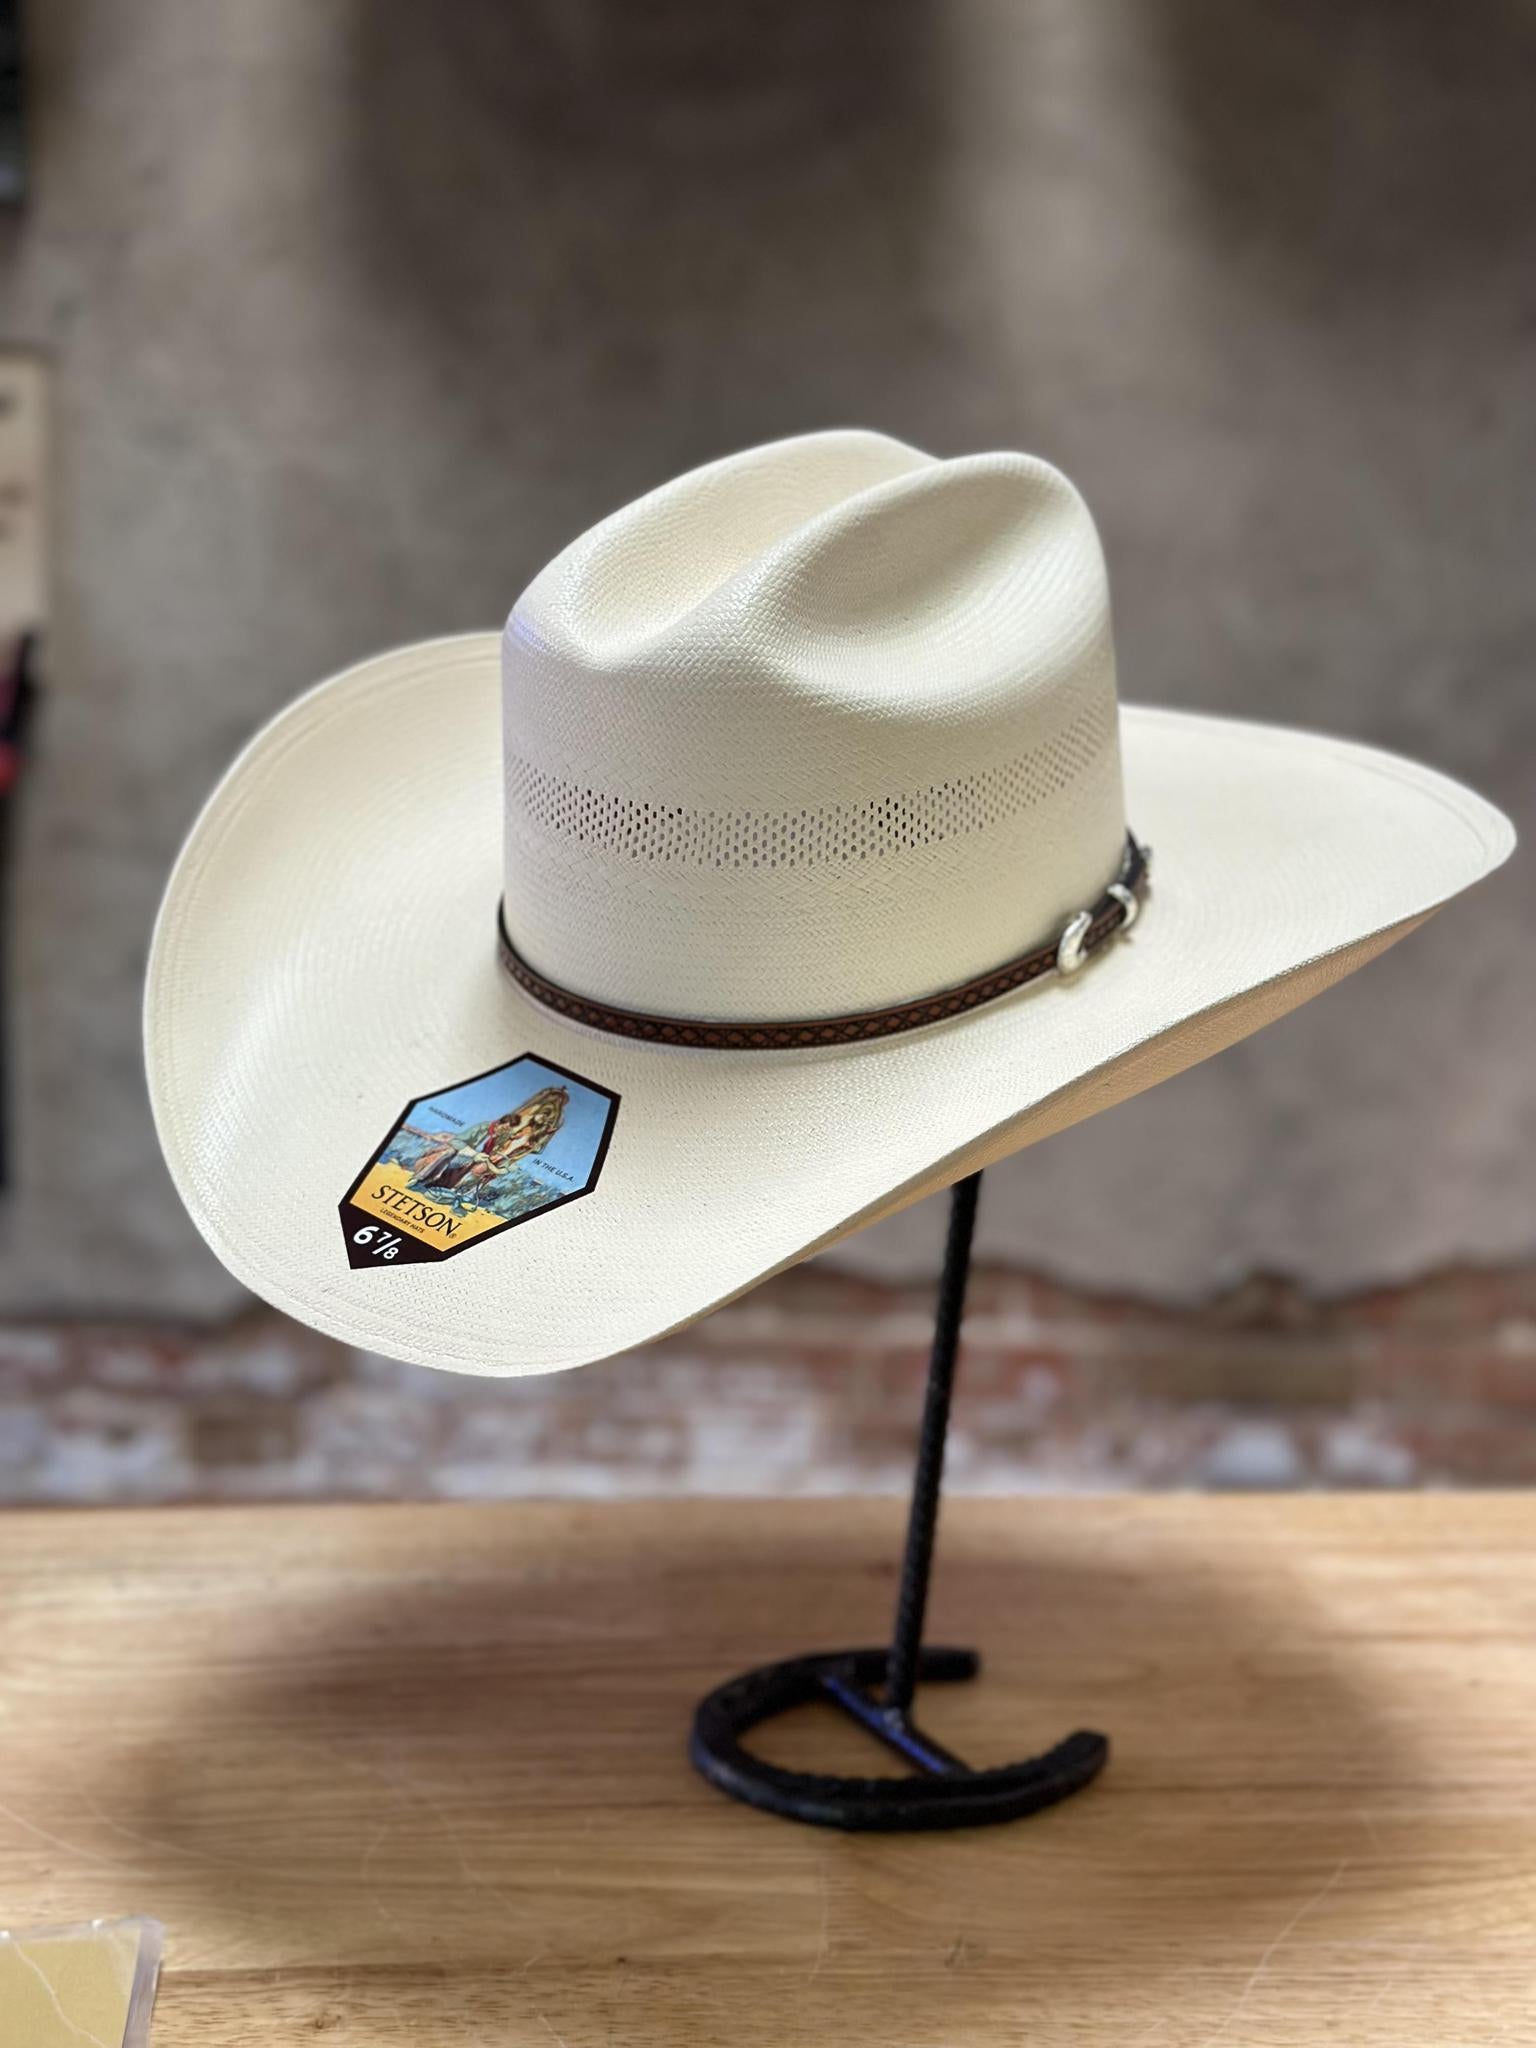 Stetson 100X Rancher Straw Cowboy Hat - 099113